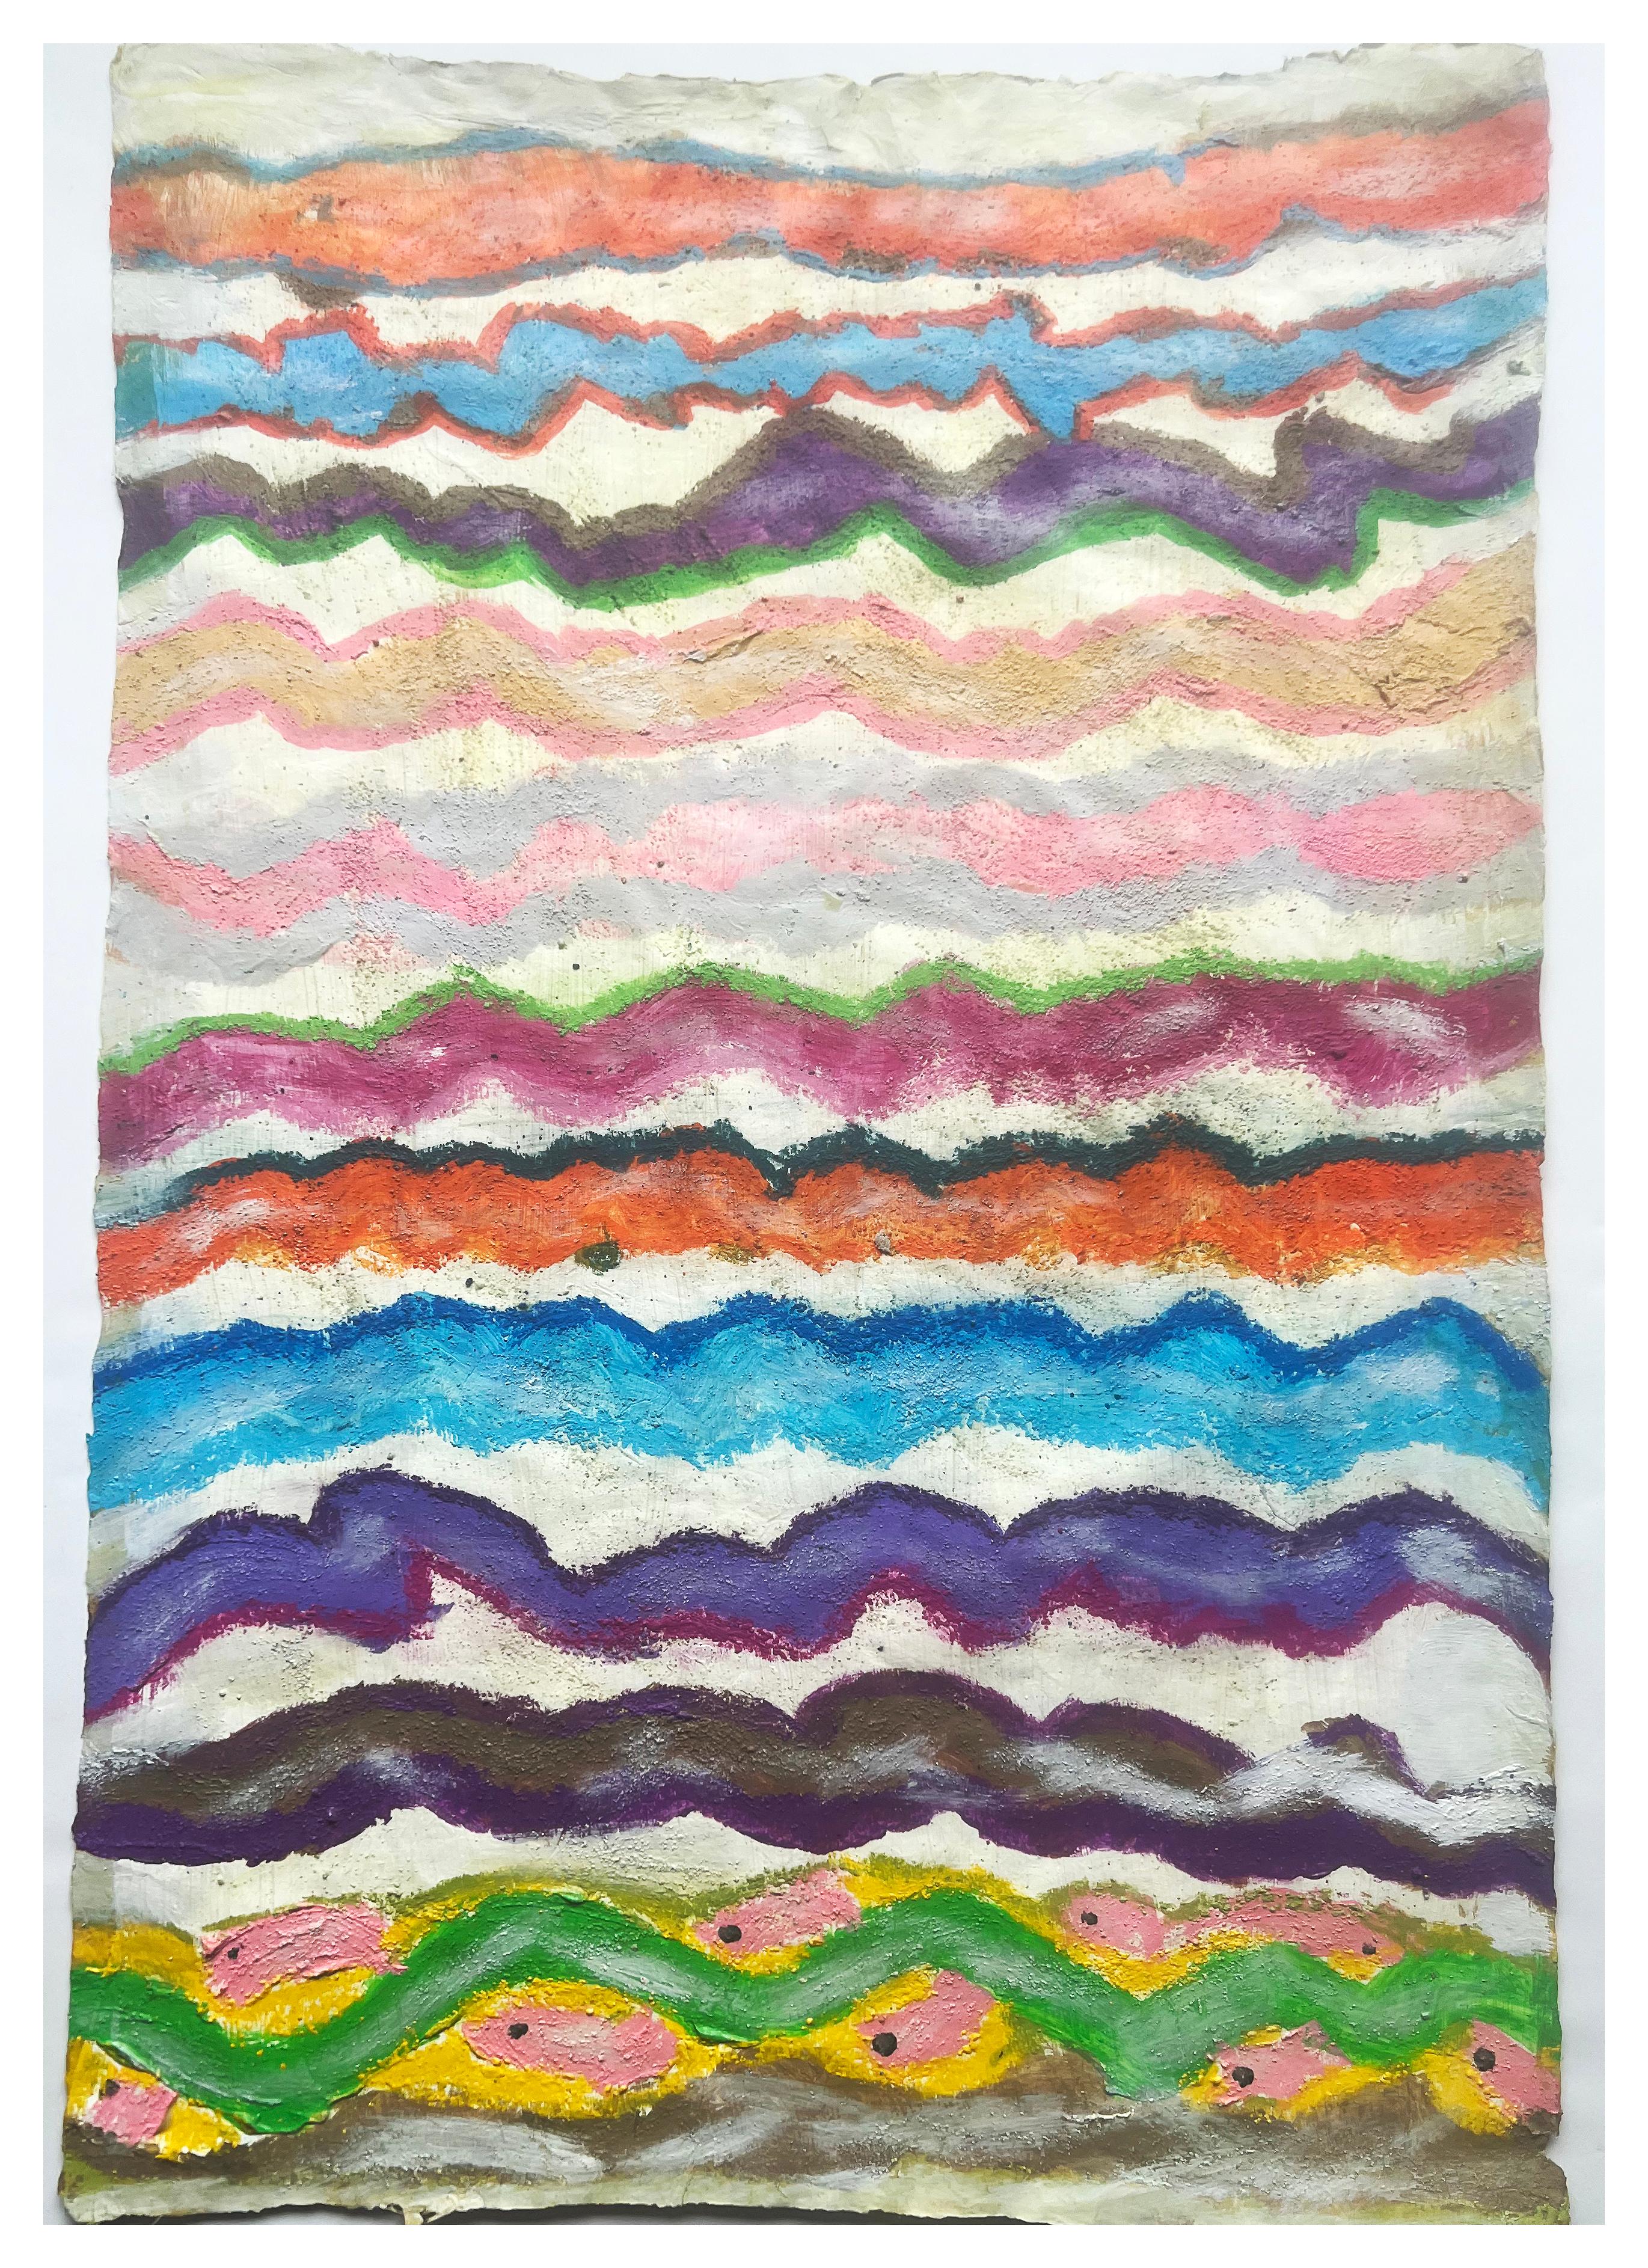 Fish, Colorful Mixed-Media Art on Washi Paper